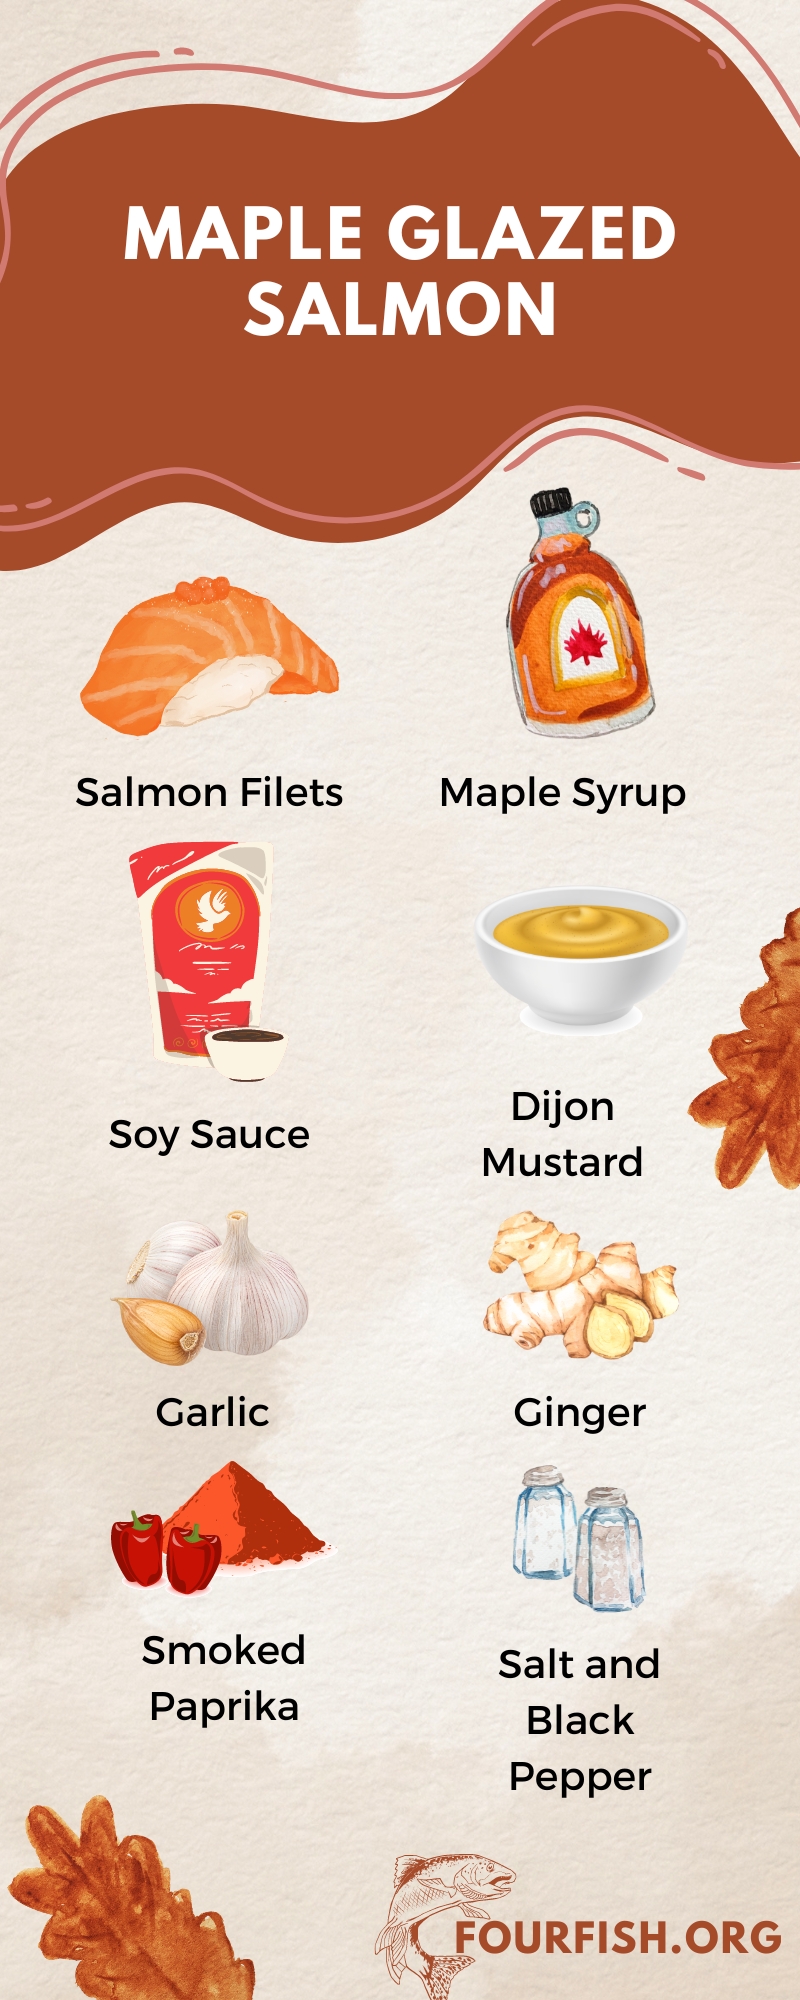 Maple Glazed Salmon Ingredients Infographic